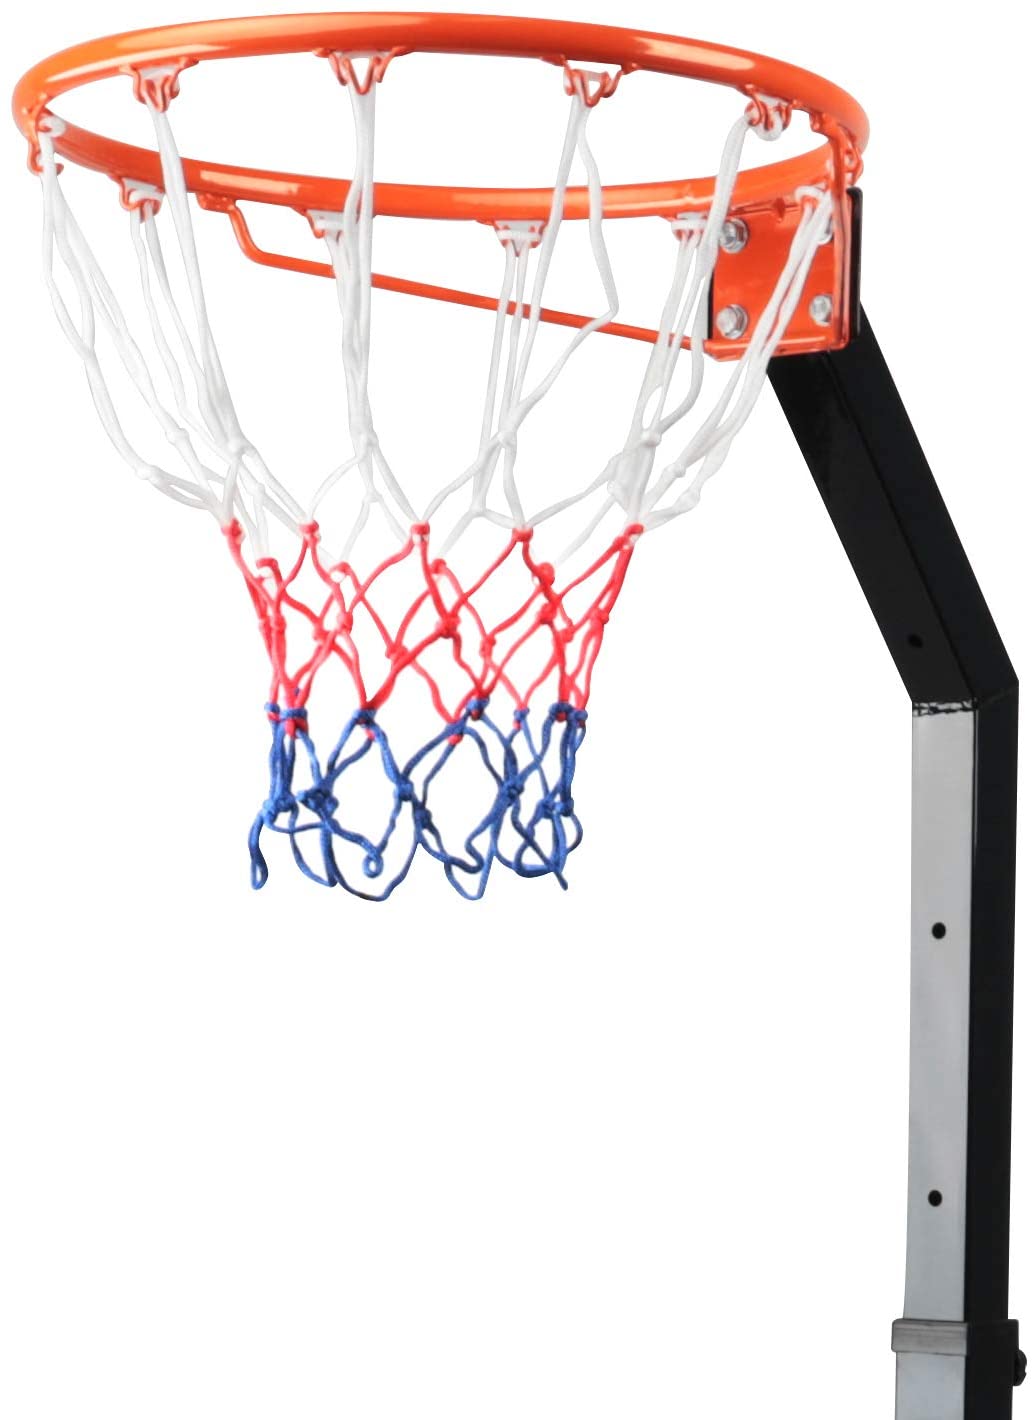 Dripex Professional Basketball Hoop Height Adjustable Portable